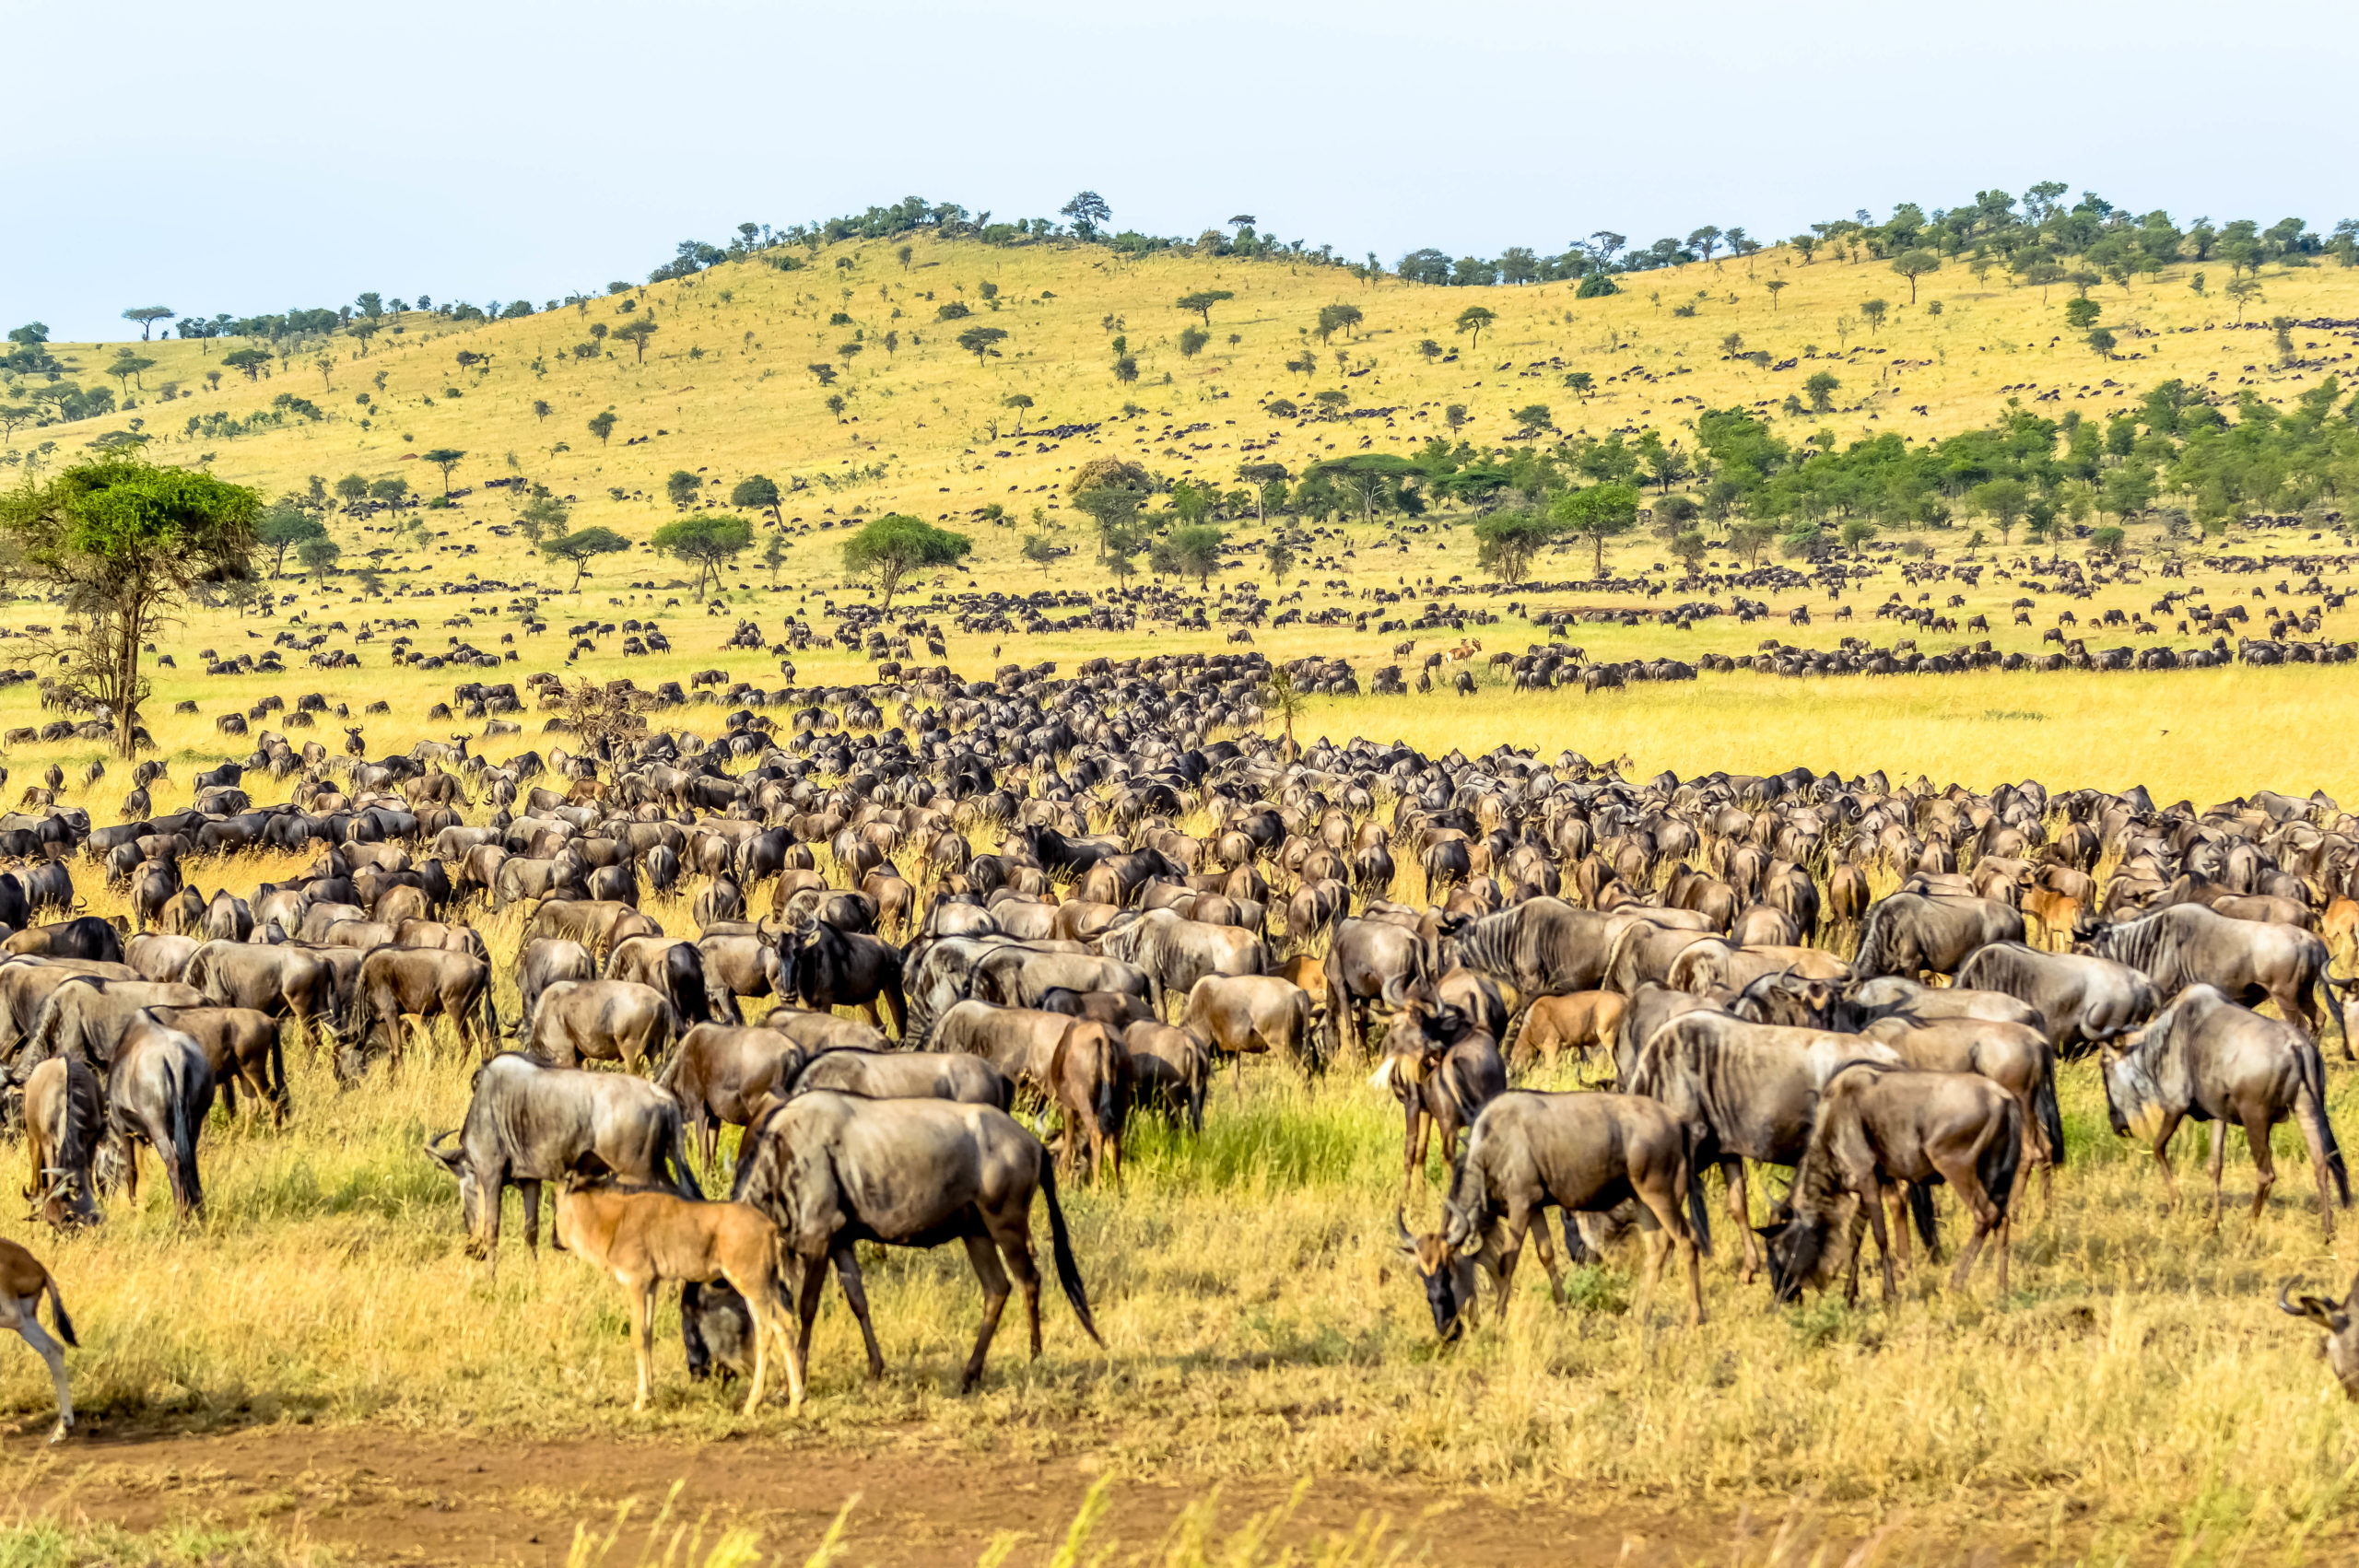 6 Day Lodge Safari -Tarangire National Park, the Ngorongoro Crater and the Serengeti National Park.